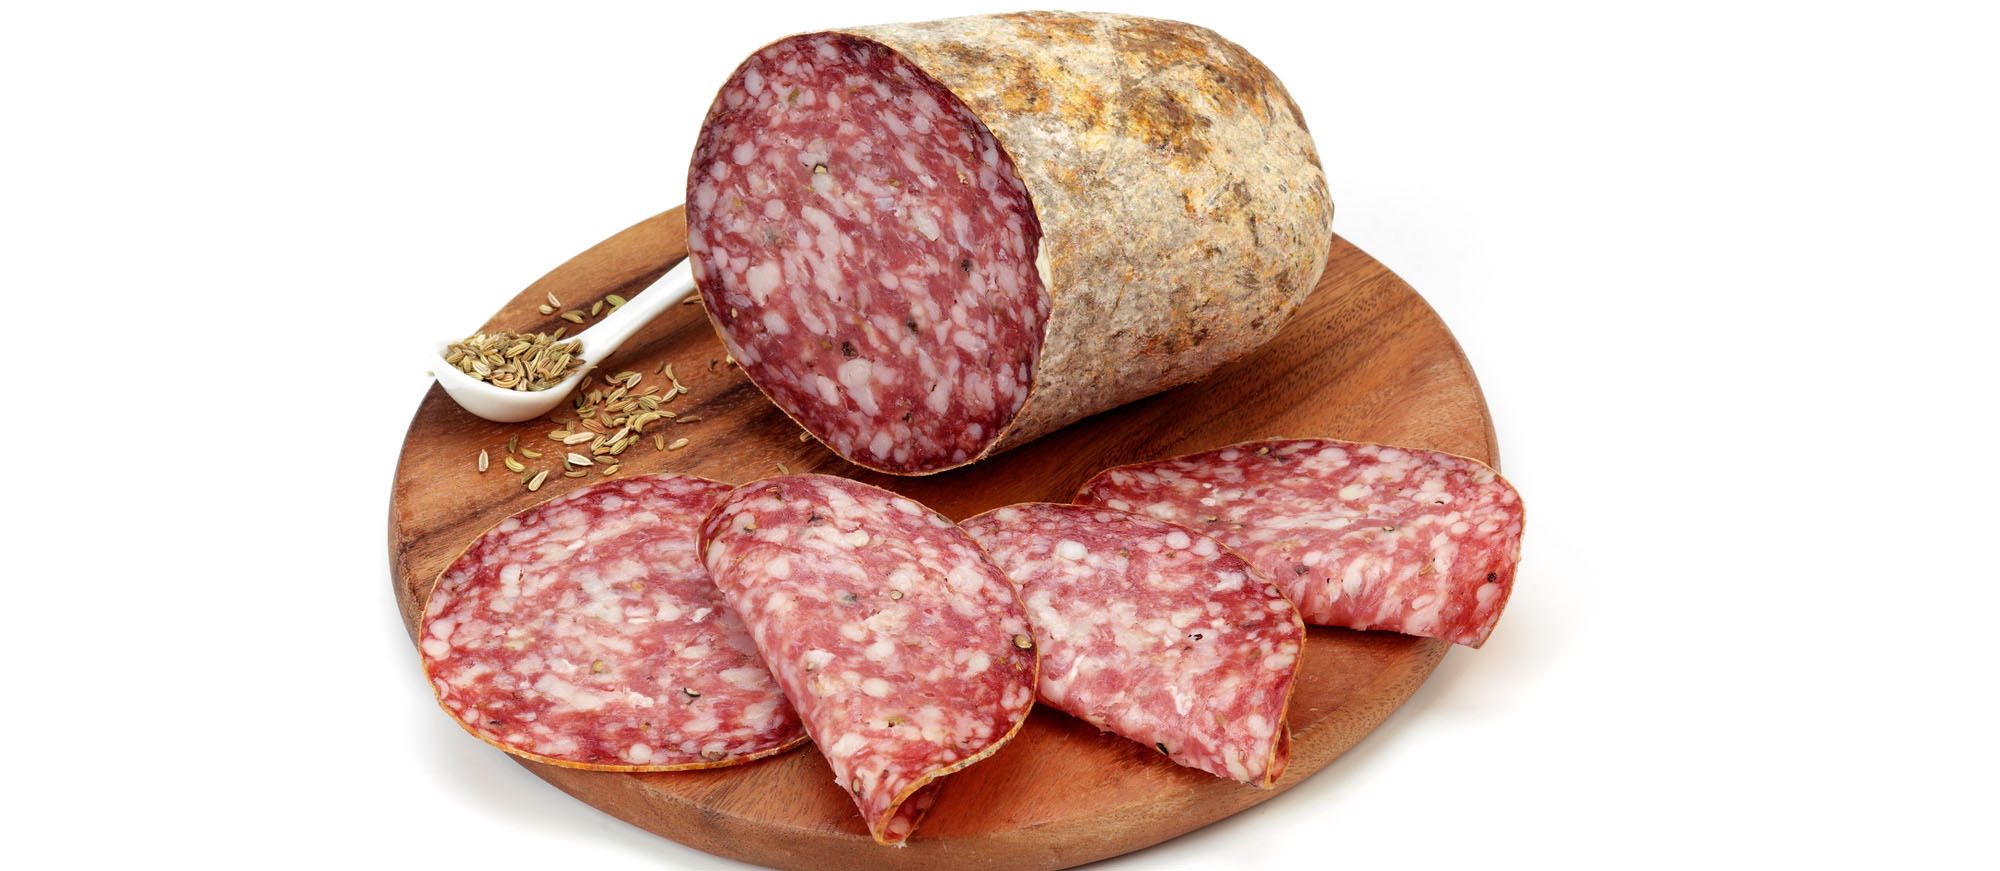 Finocchiona | Local Sausage/Salami From Tuscany, Italy